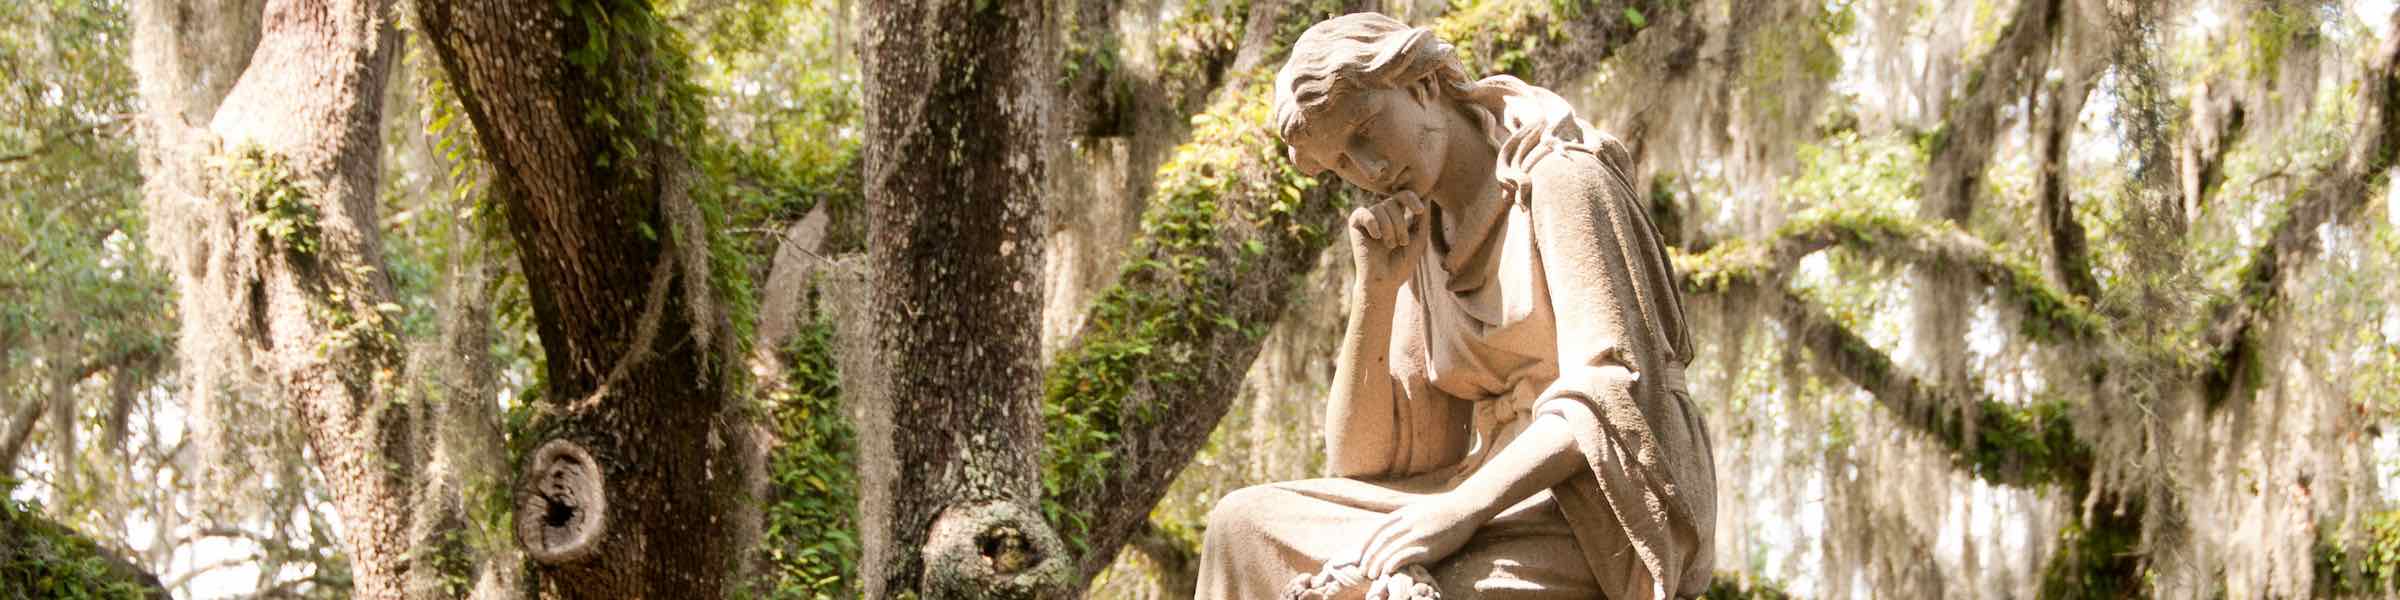 Statue of a female figure in a Savannah, GA cemetery.